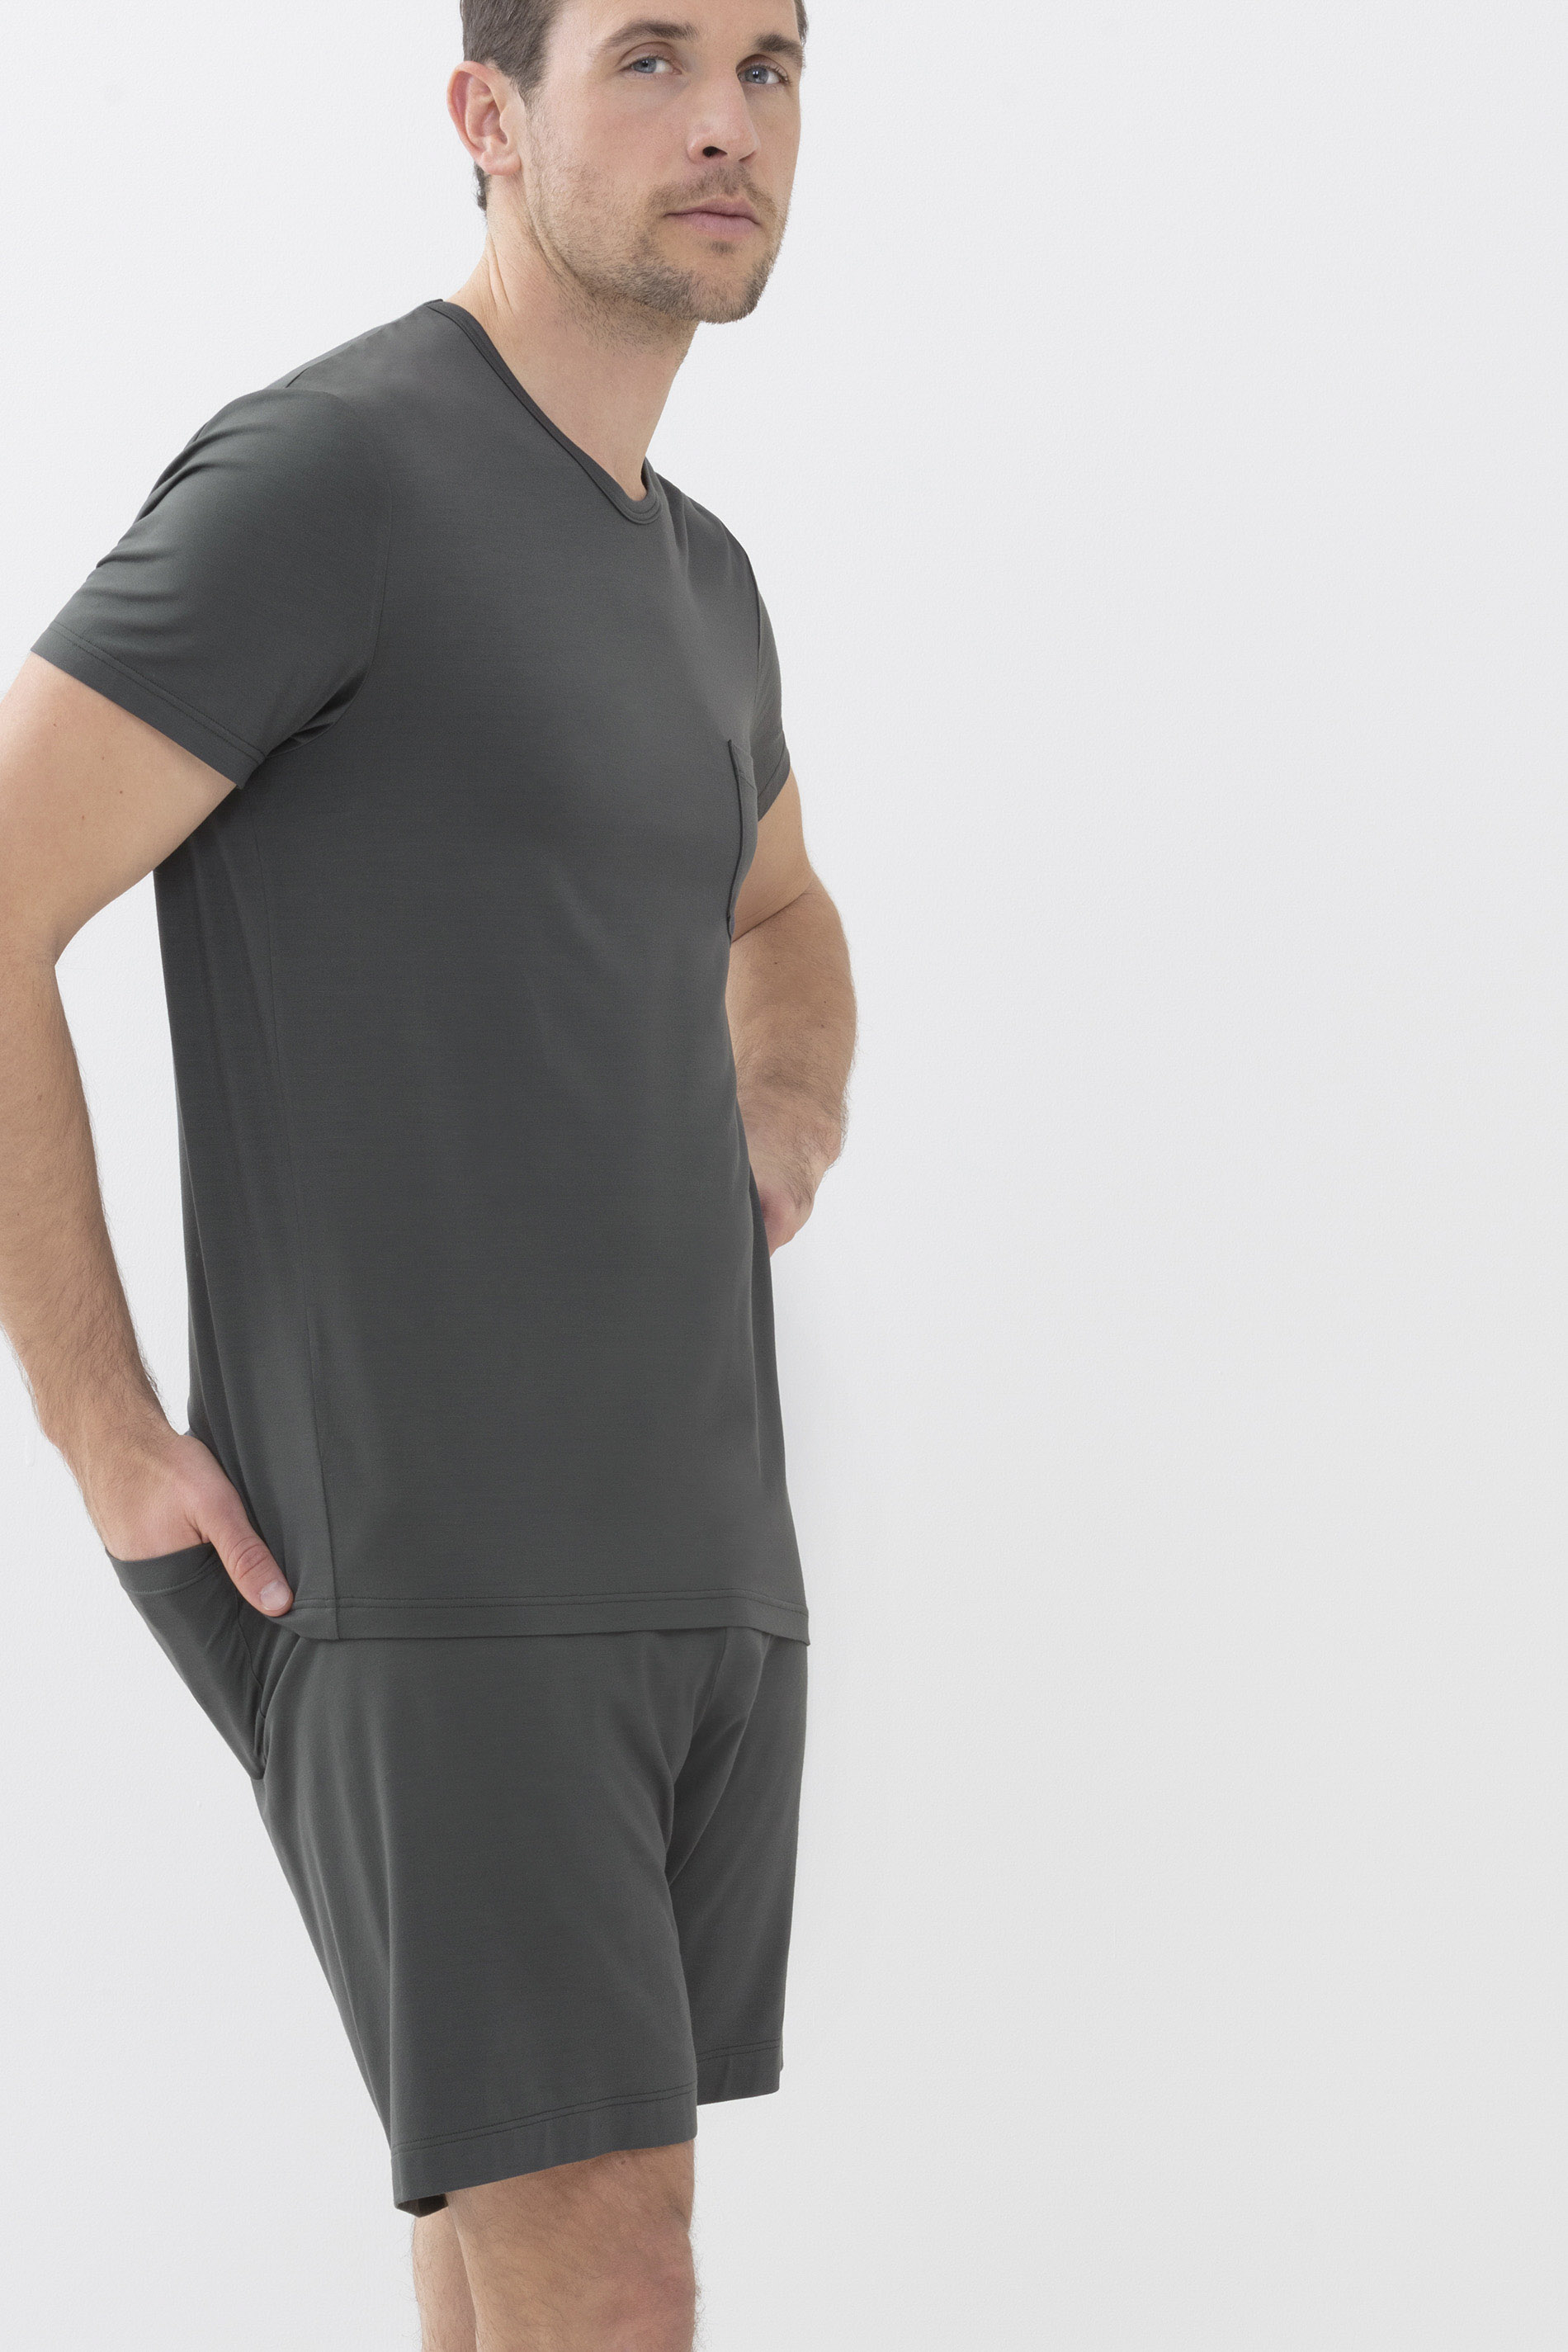 T-Shirt Stormy Grey Serie Jefferson Modal Detailansicht 02 | mey®